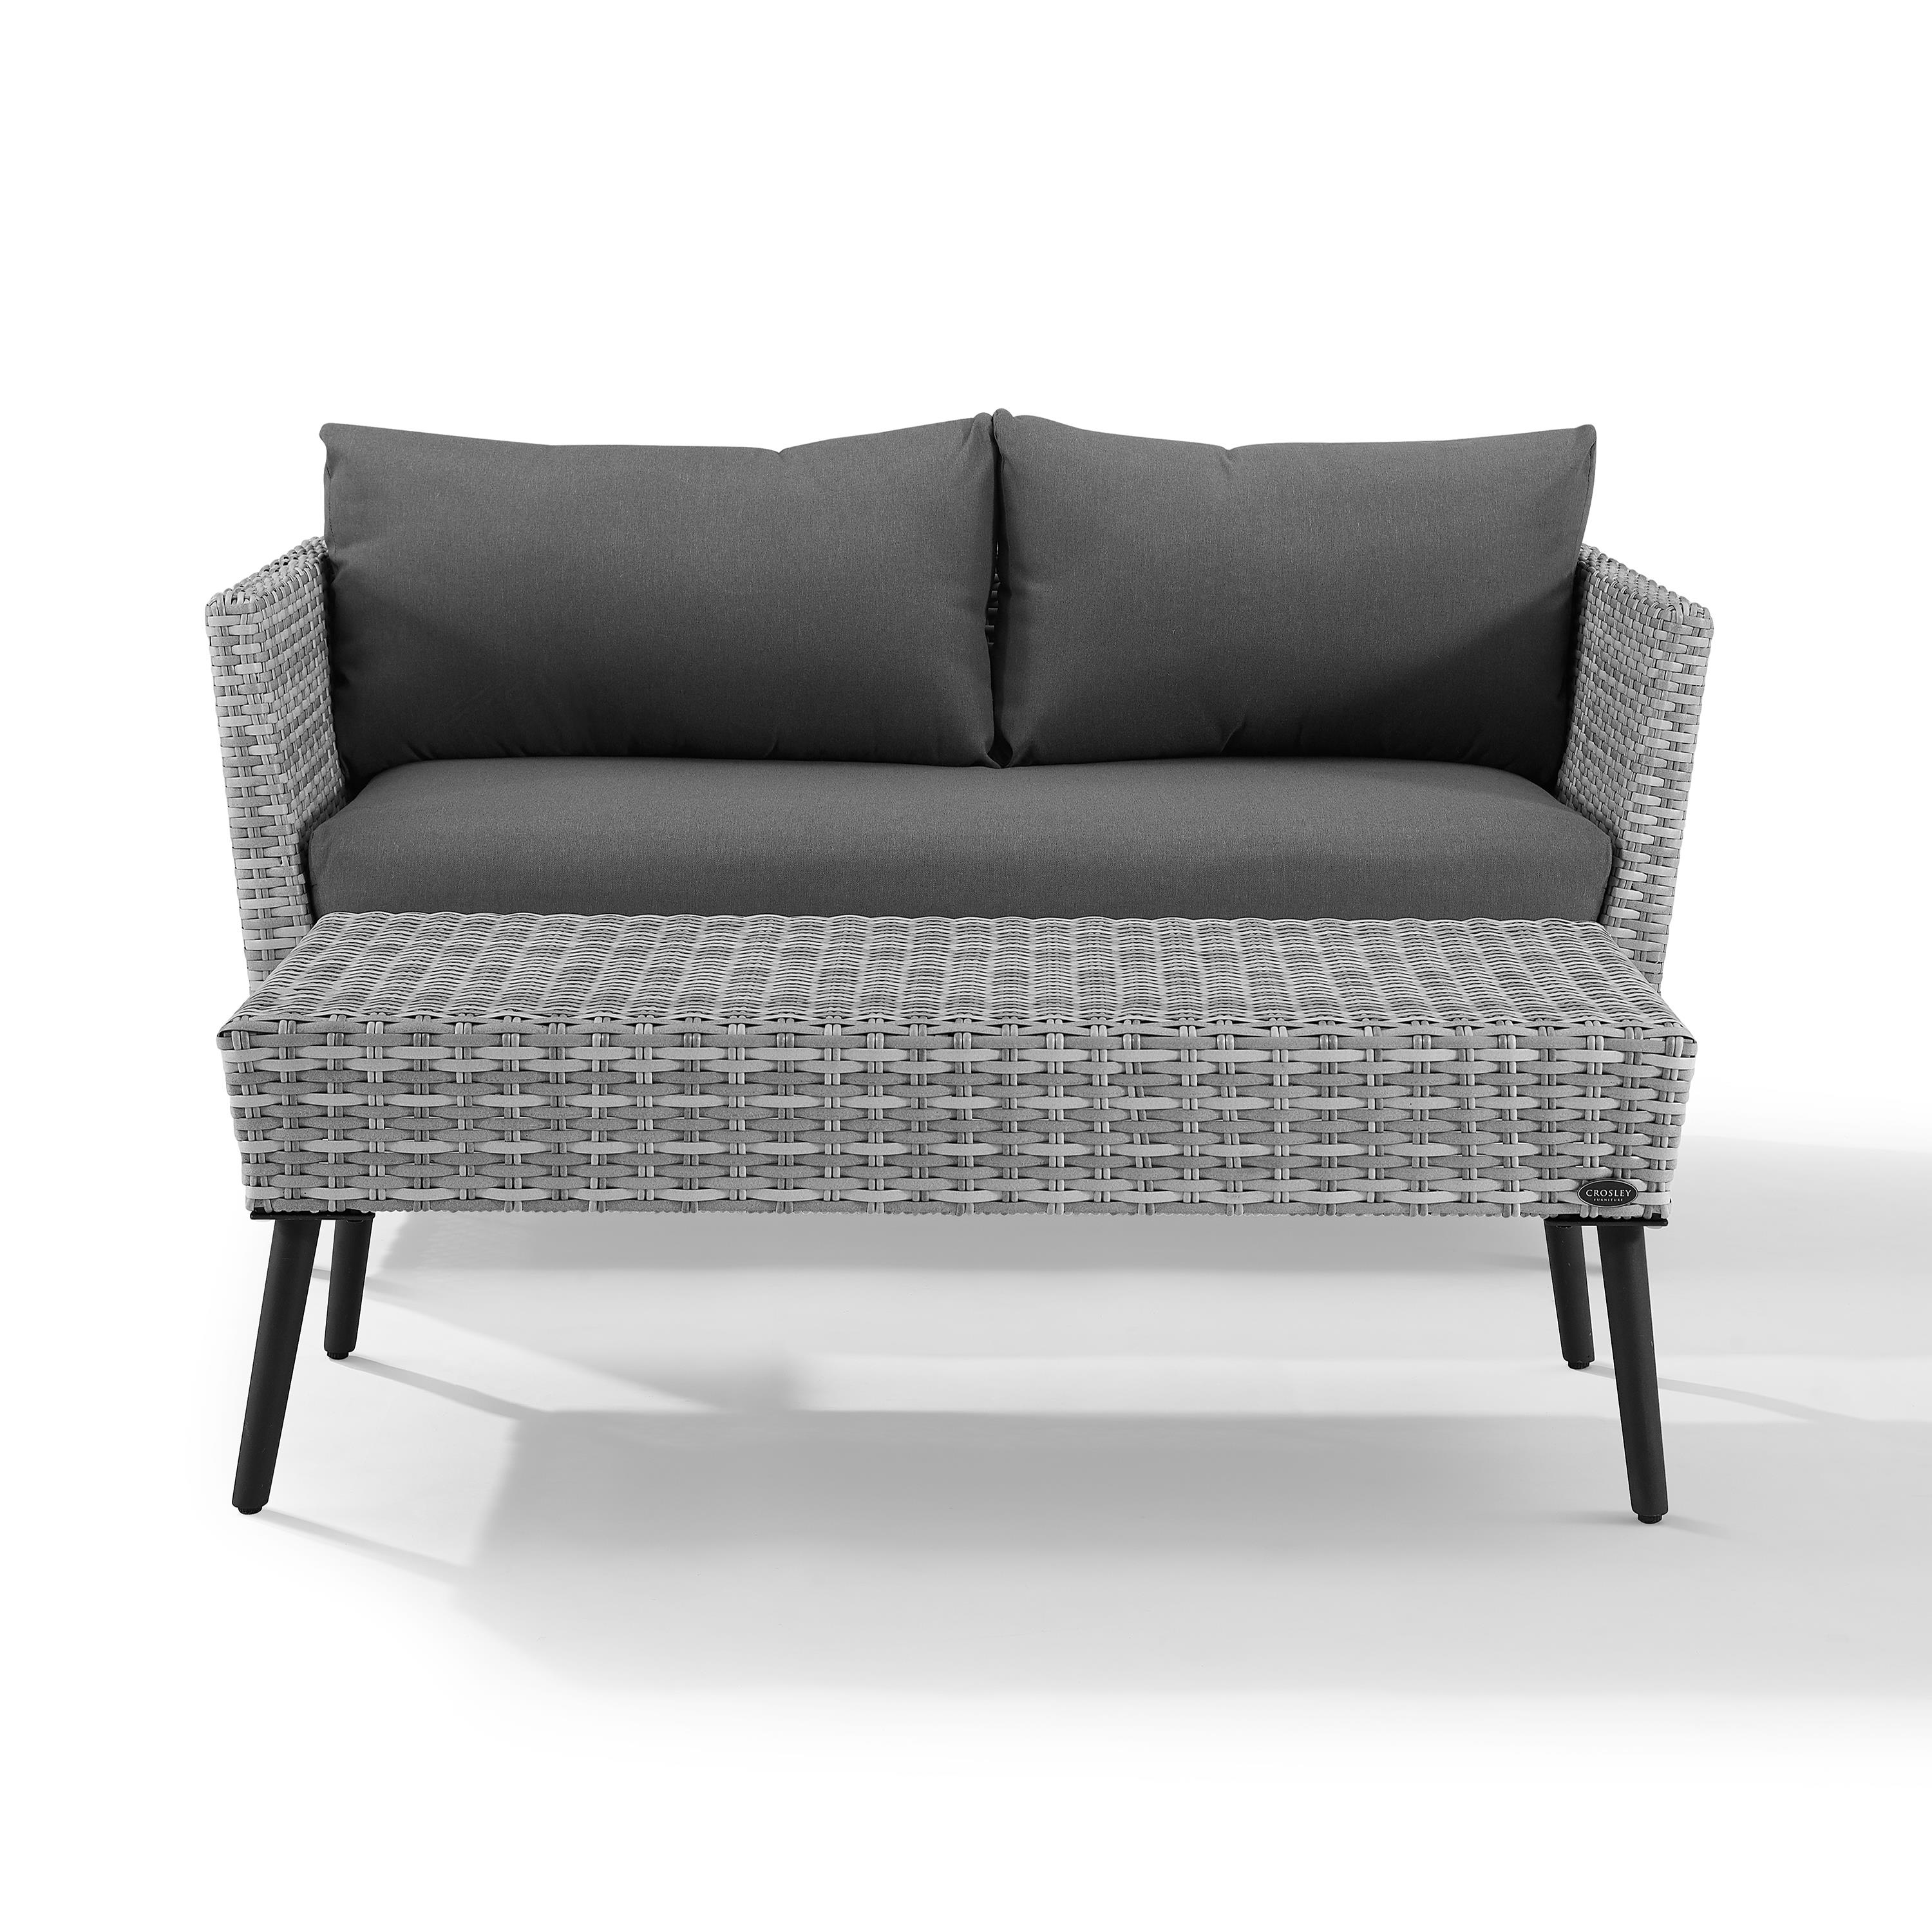 Crosley Richland 2 Piece Wicker Patio Sofa Set in Gray - image 2 of 10